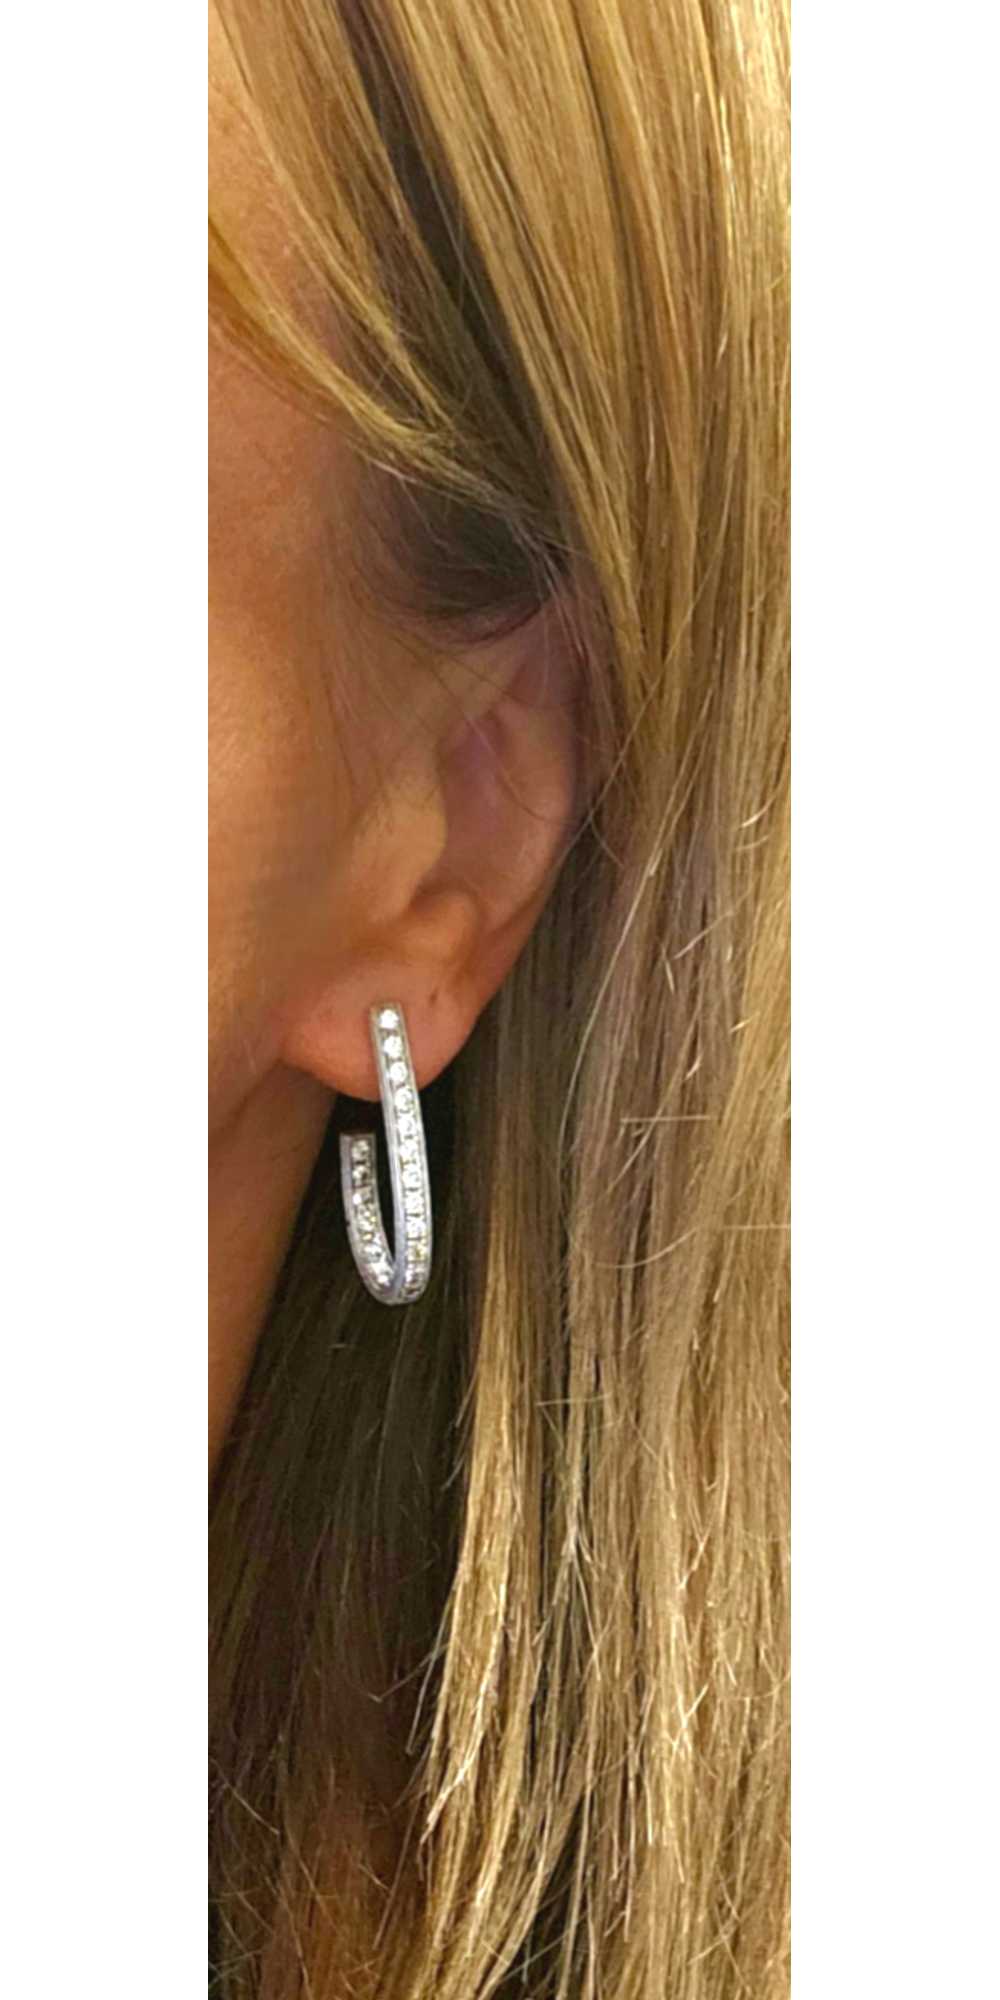 Bespoke 14ct White Gold Diamond Earrings - image 4